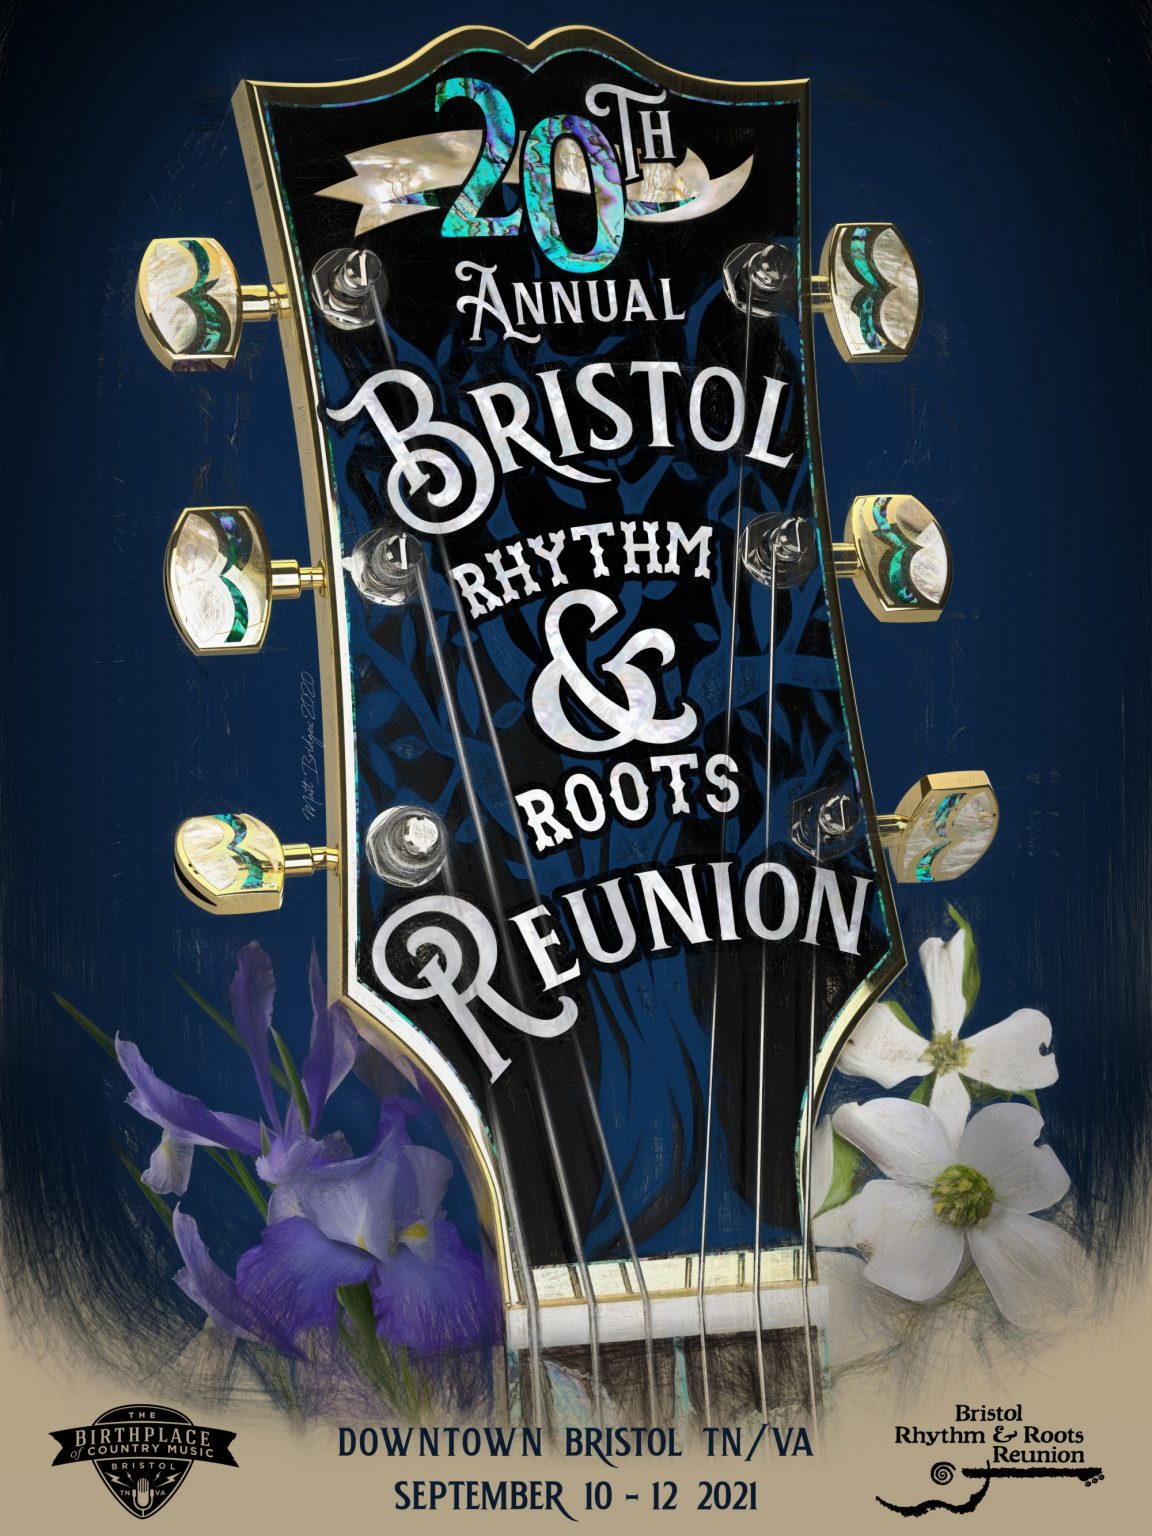 Win Passes to Bristol's Rhythm & Roots Festival 96.9 WXBQ